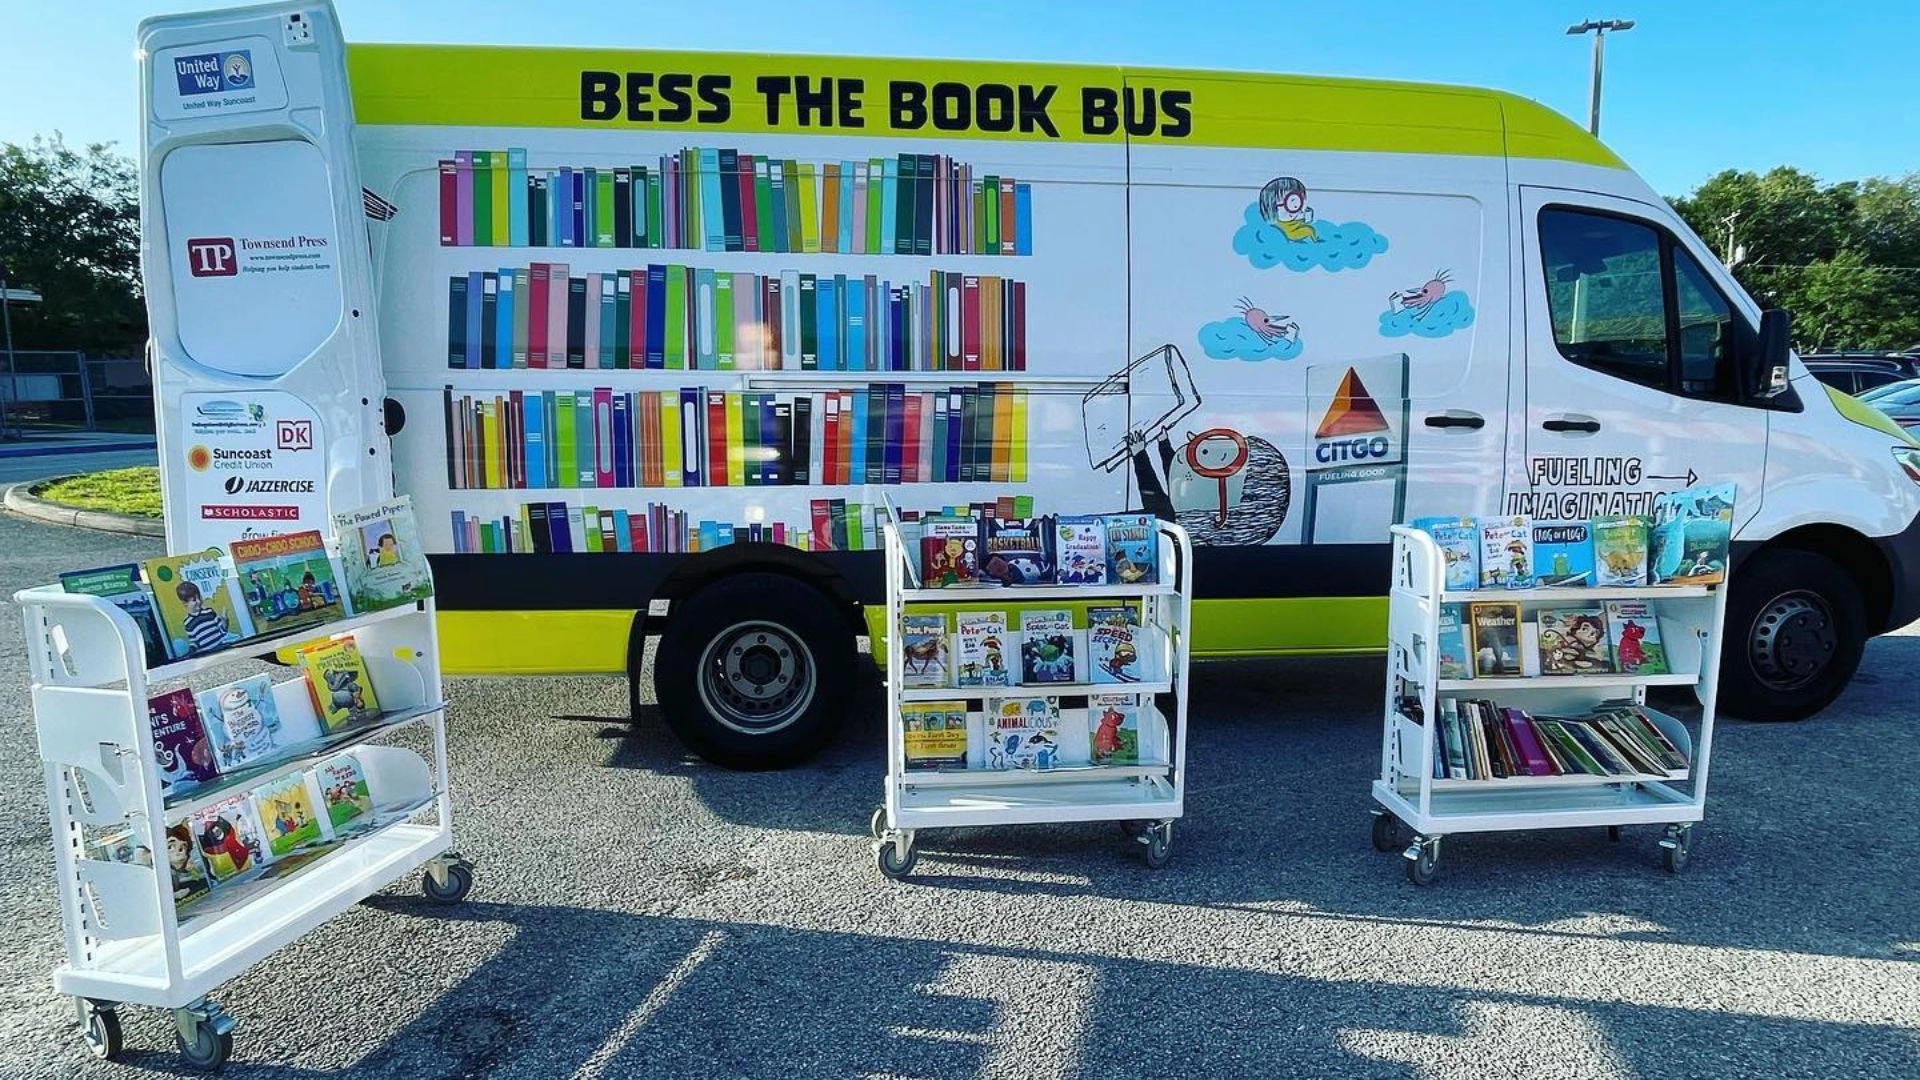 Bess the book bus